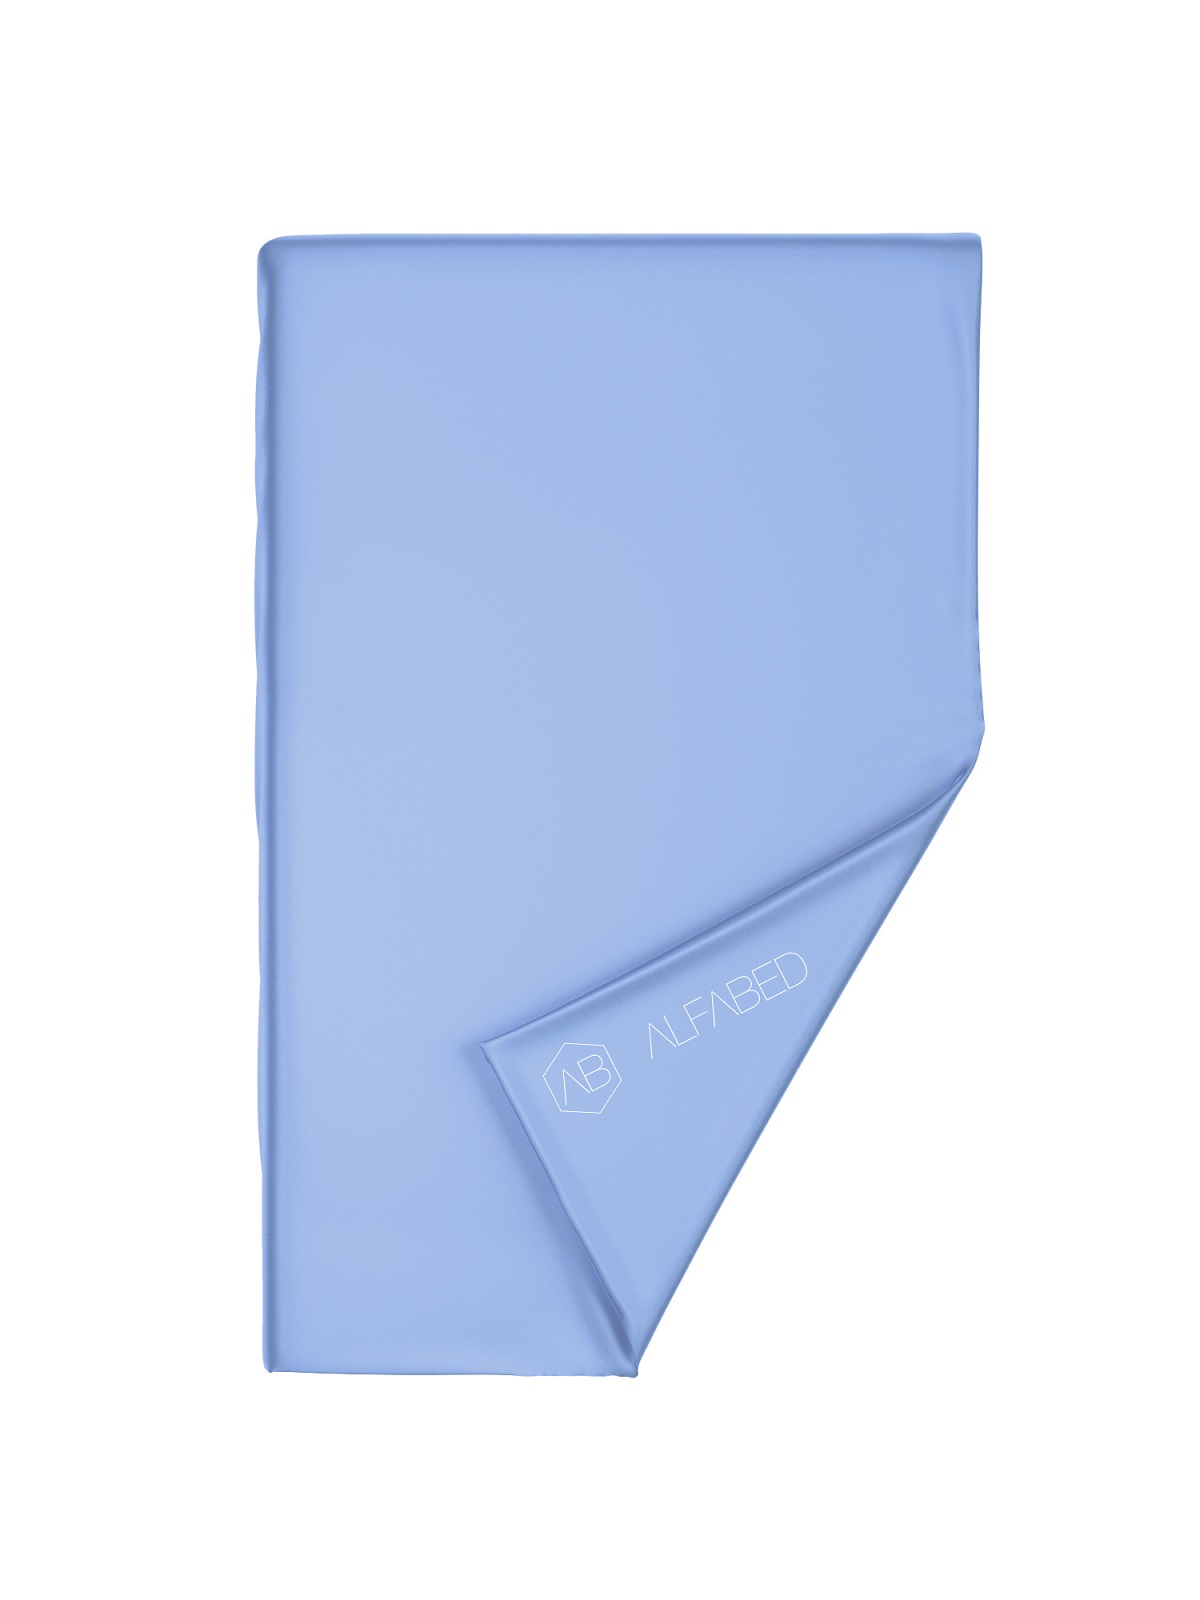 Topper Sheet-Case Royal Cotton Sateen Steel Blue H-151